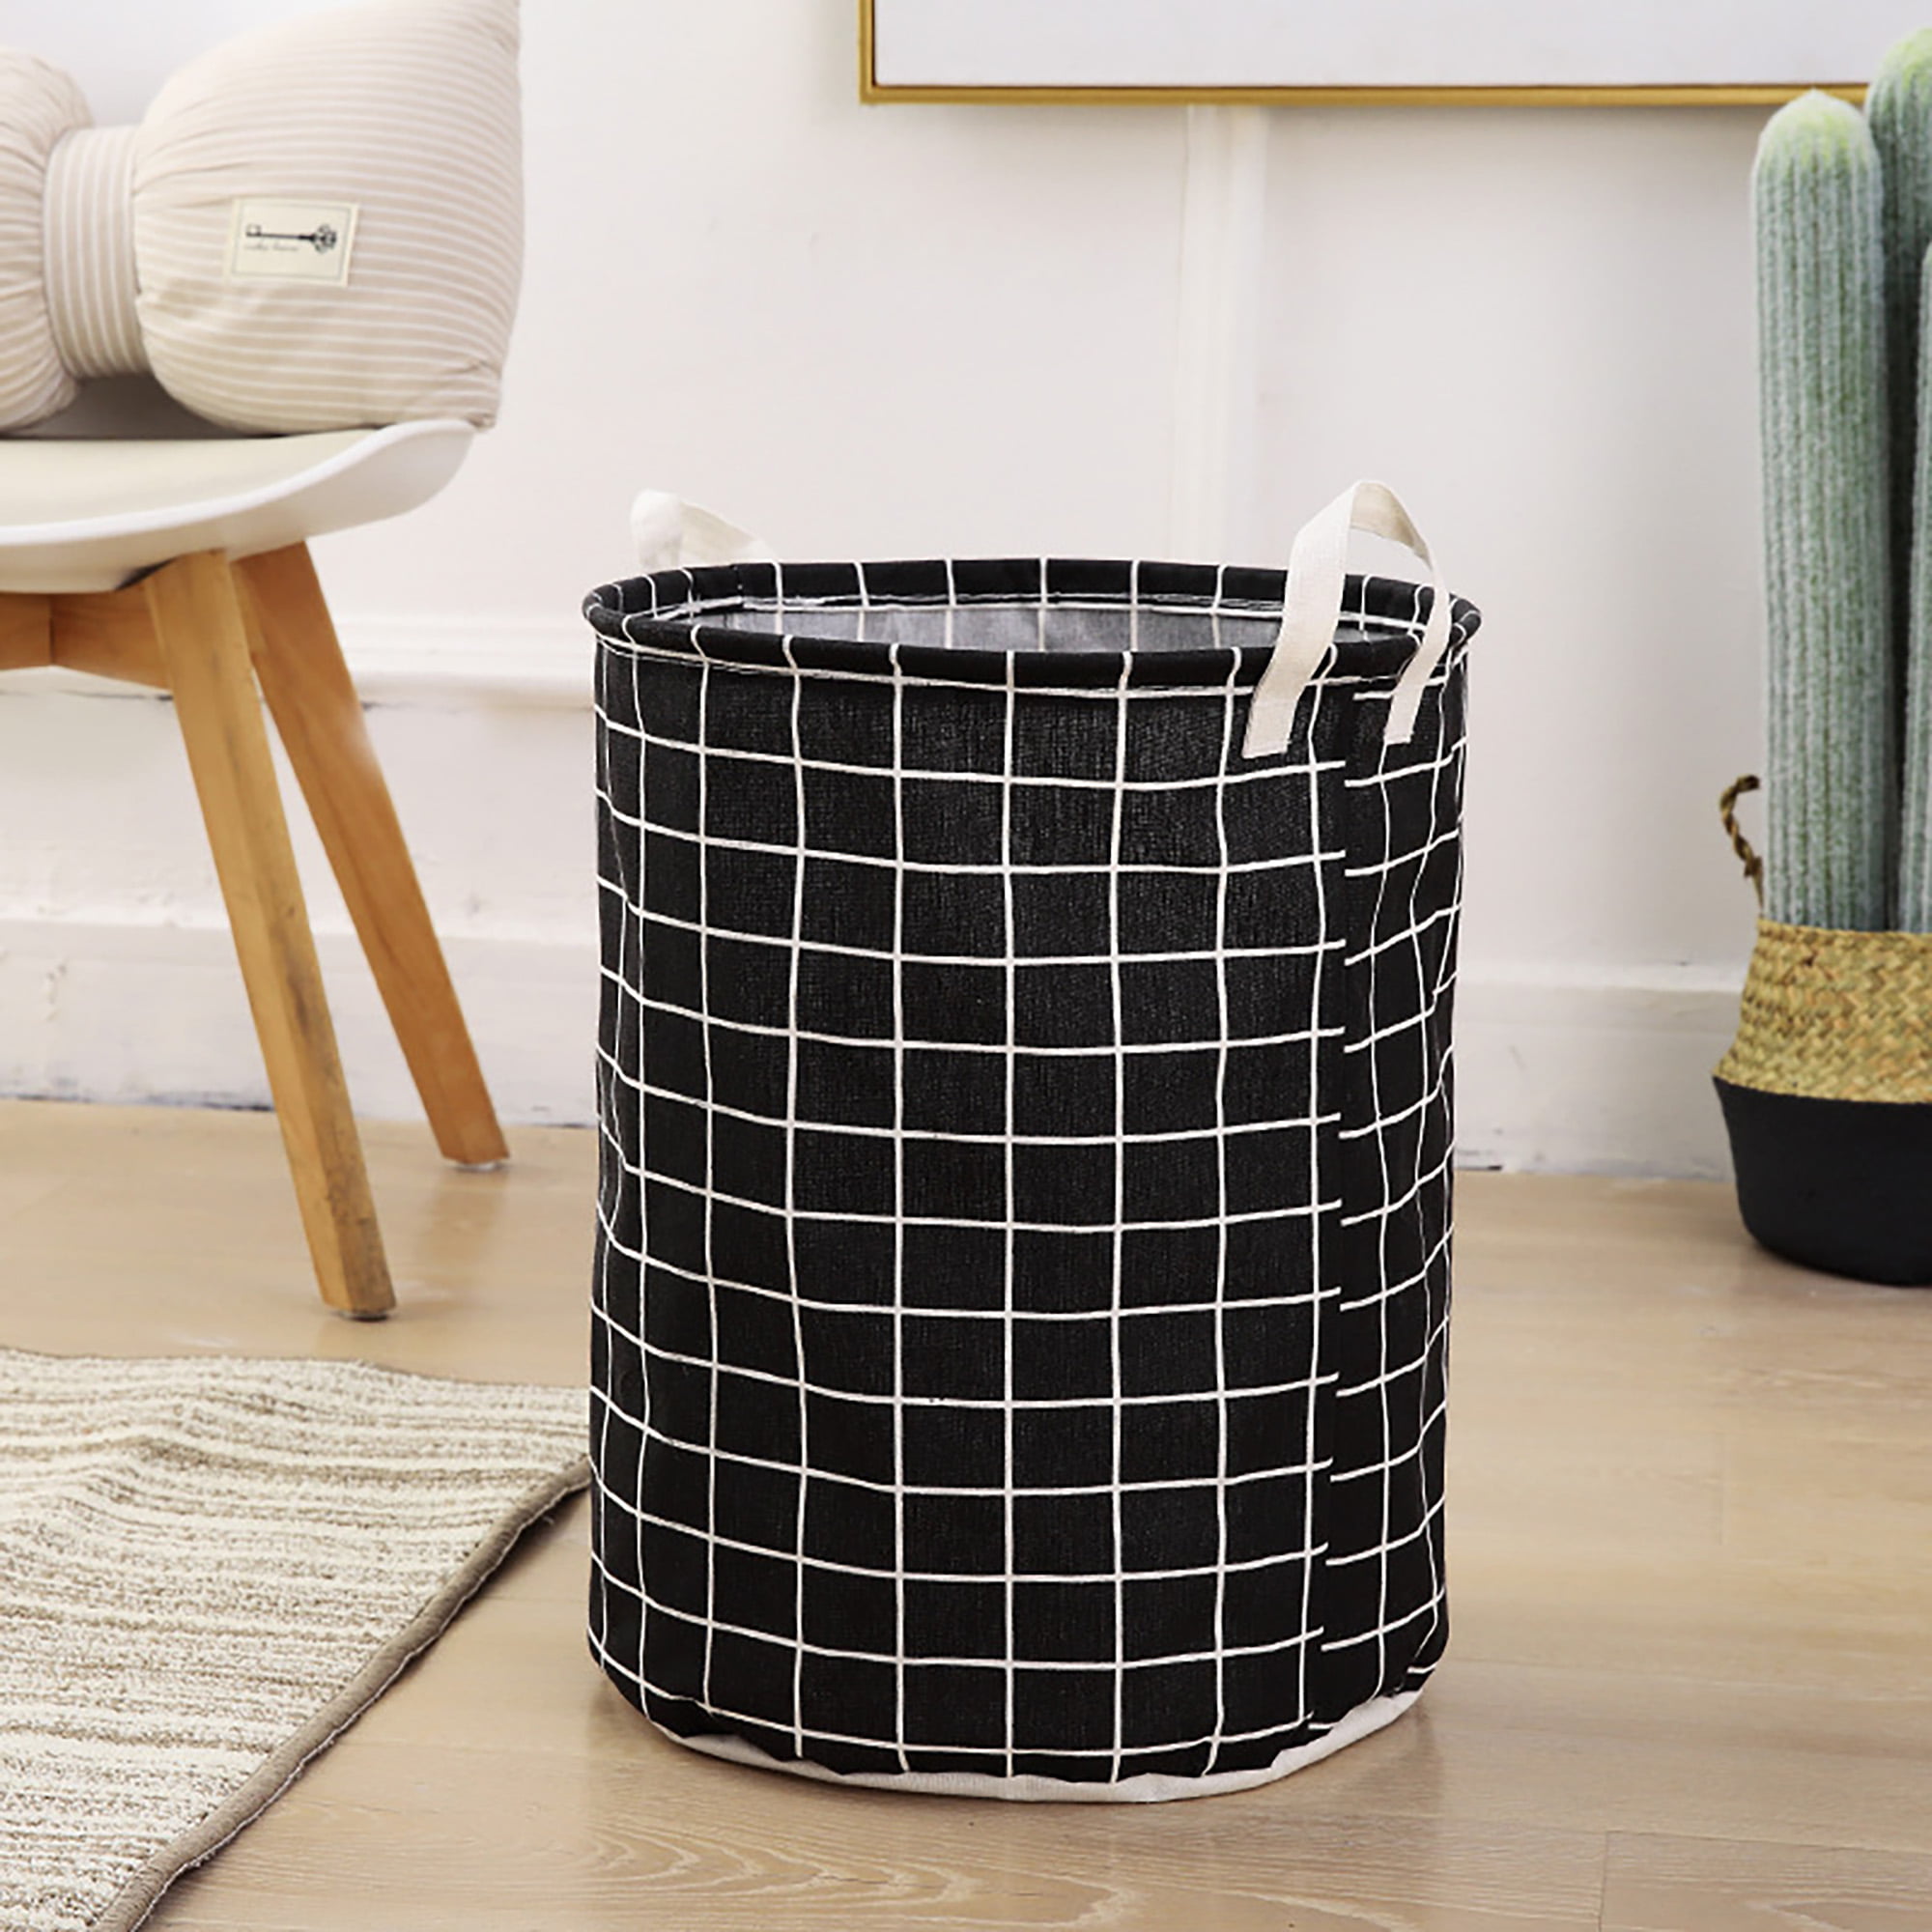 Laundry Basket Bag Foldable Cotton Linen Washing Clothes Hamper Storage Toy NEW 